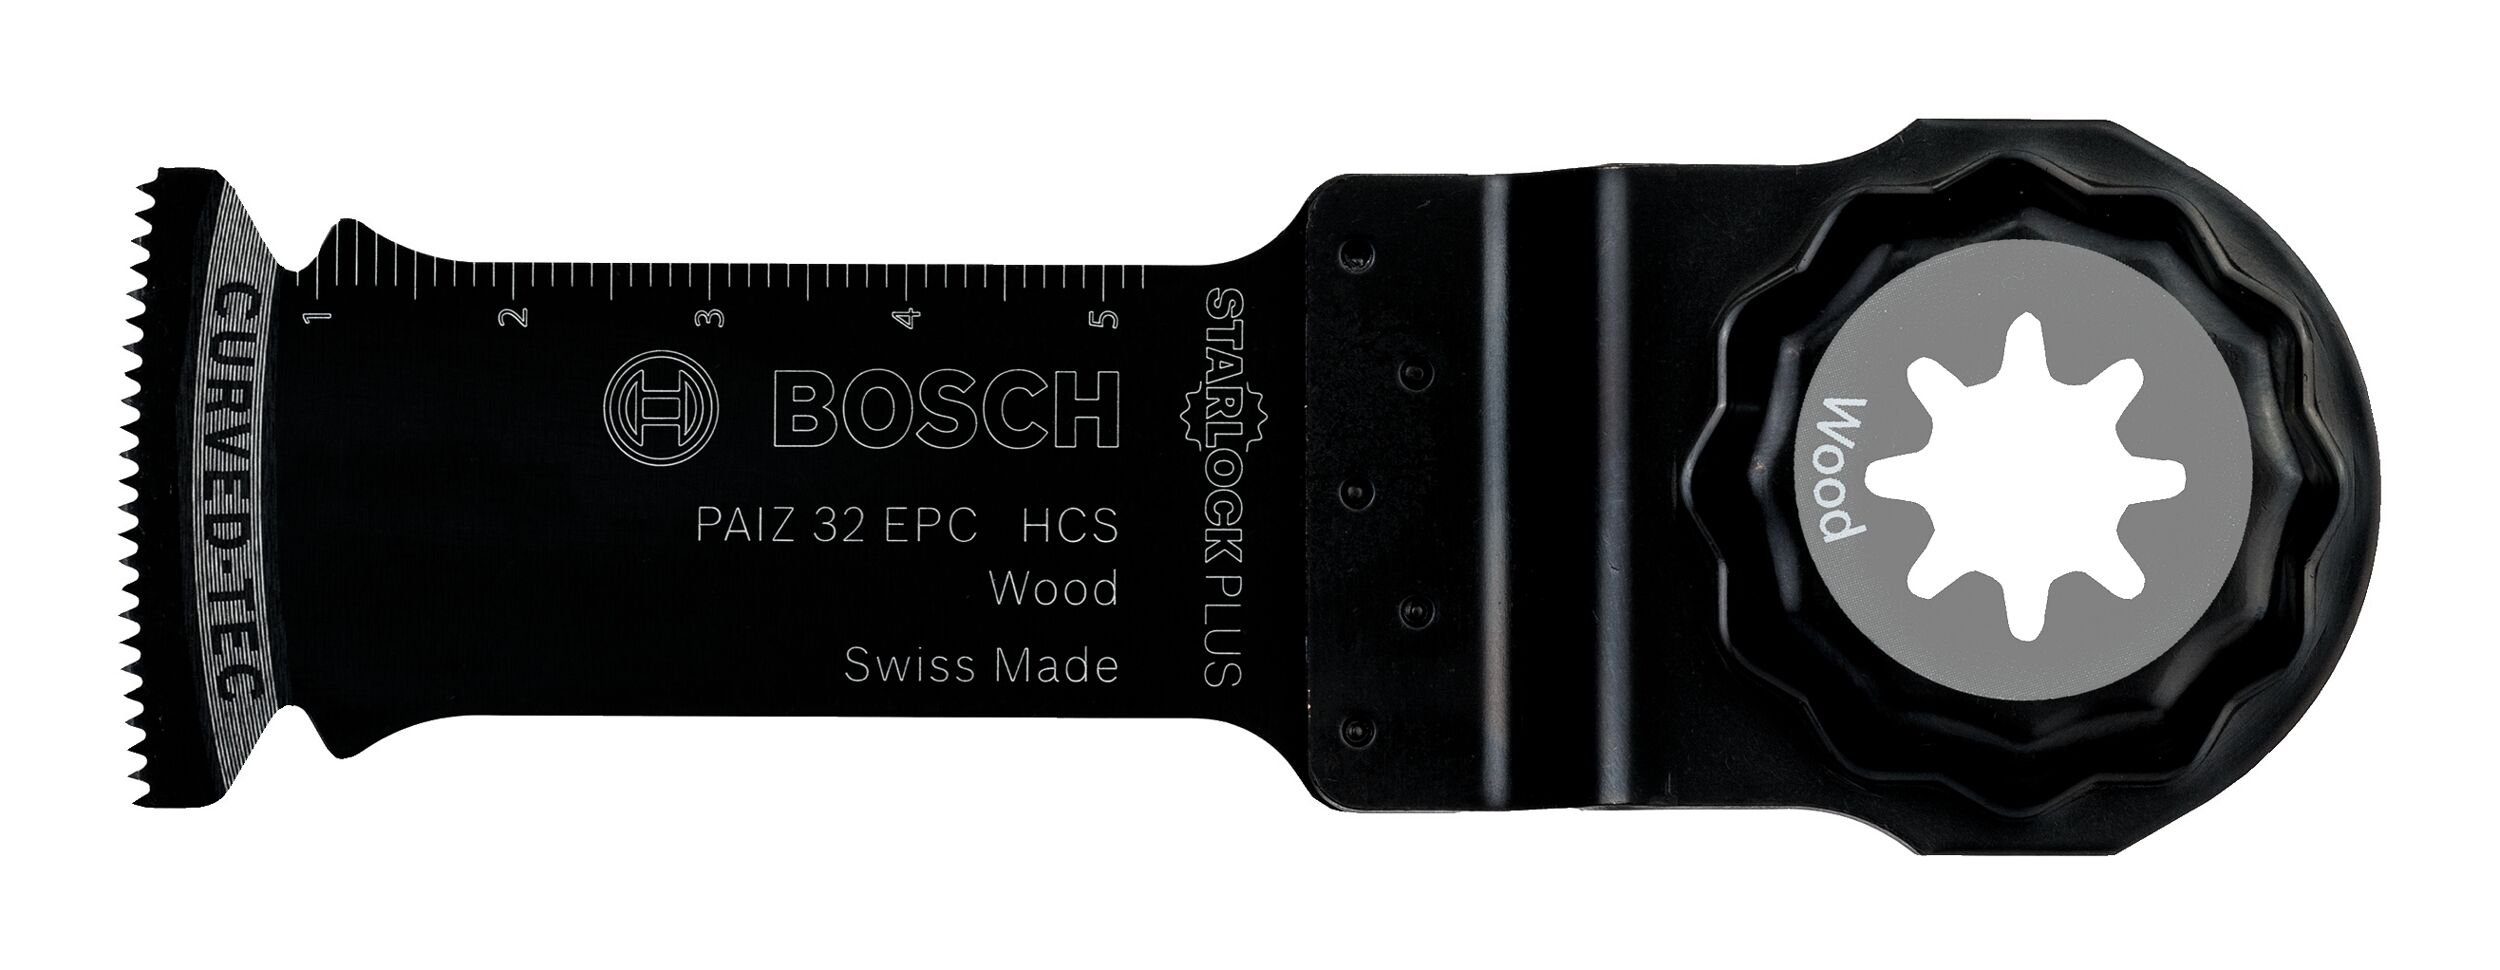 - 10er-Pack BOSCH x (10 mm - PAIZ HCS 32 32 Tauchsägeblatt Wood EPC 60 Stück),